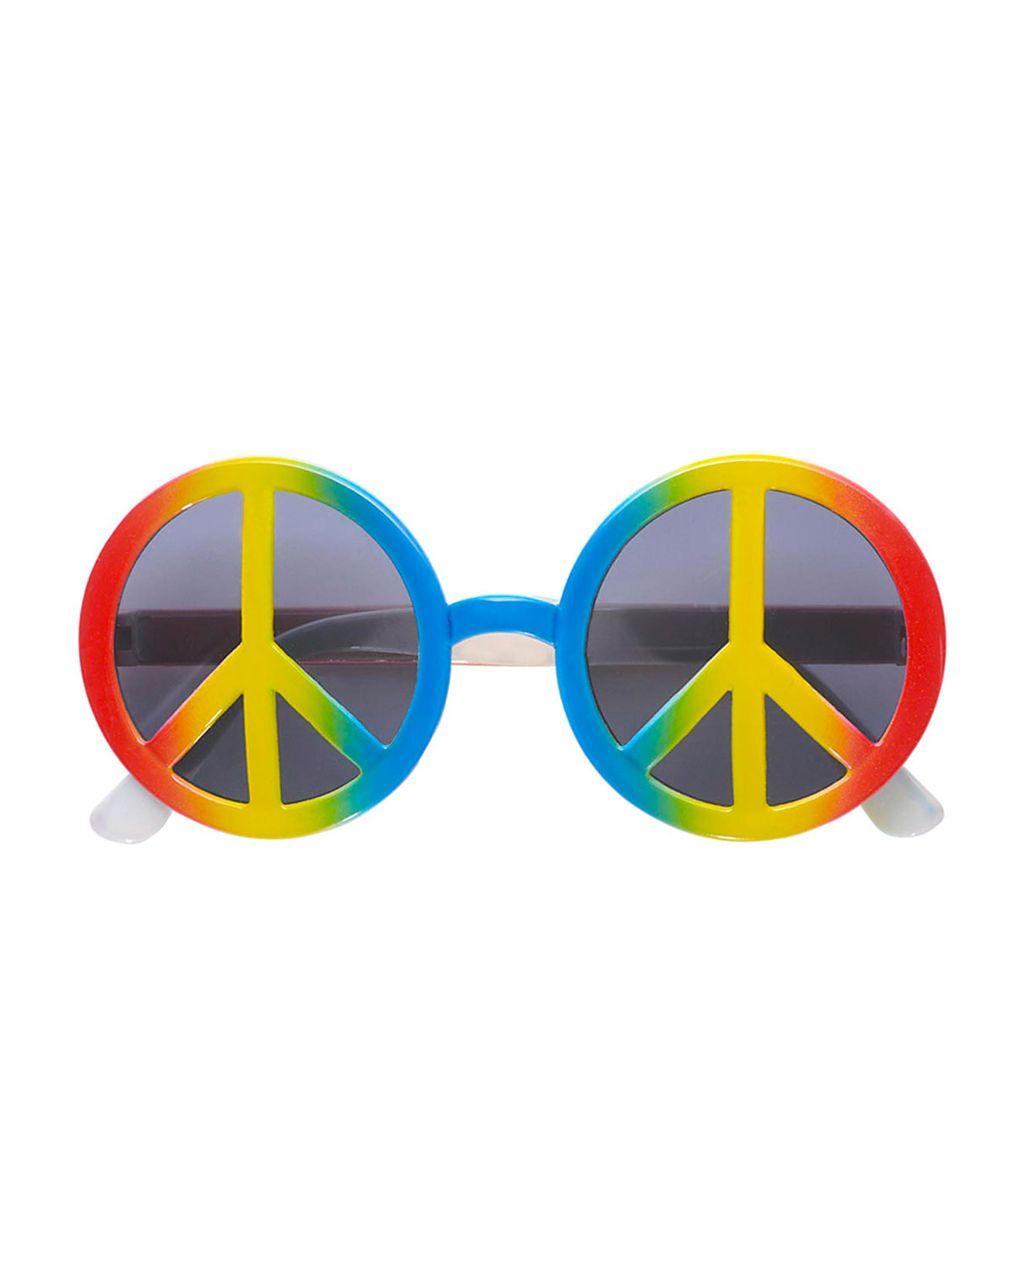 Hippie Glasses Logo - Love & Peace Hippie Glasses Costume Accessories. Horror Shop.com